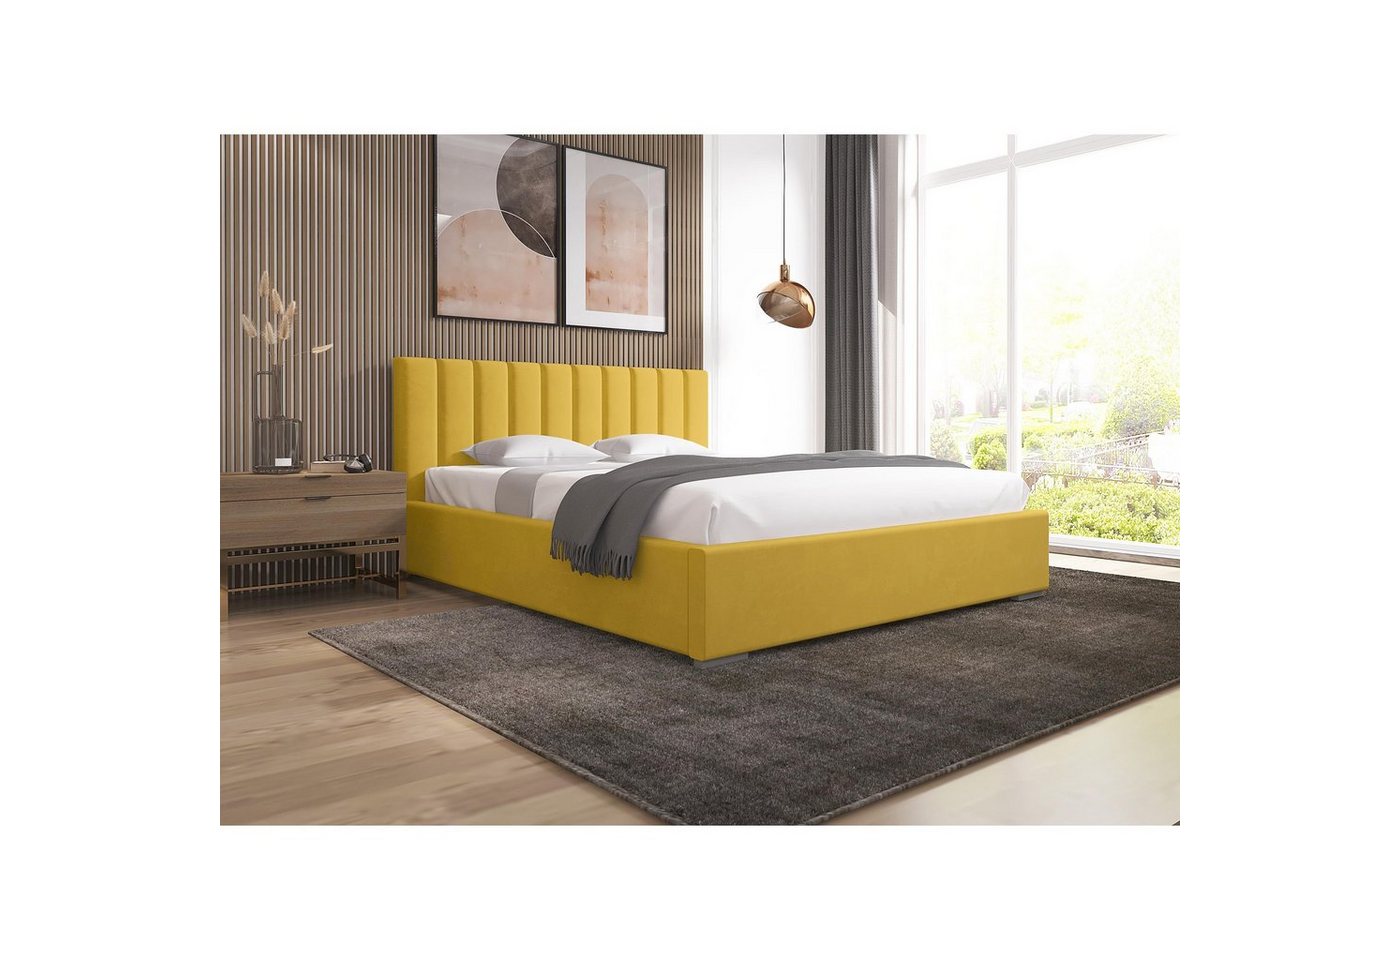 Beautysofa Polsterbett Adeline (stilvoll Bett mit Velvet-Bezug, Beige Polsterbett 120 x 200 cm), mit Bettkasten, mit Holzgestell von Beautysofa